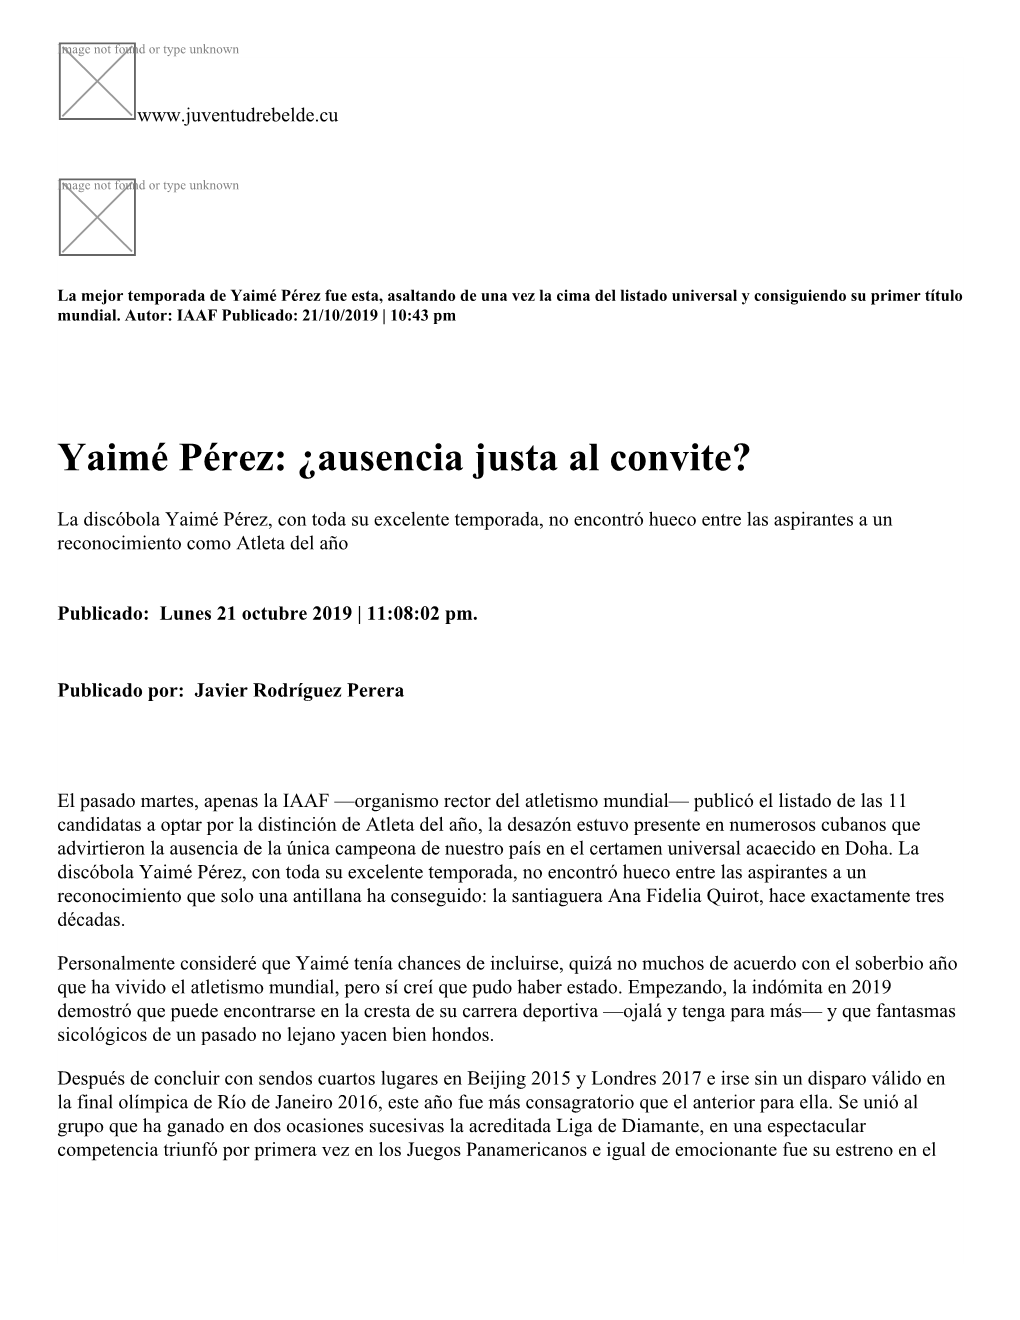 Yaimé Pérez: ¿Ausencia Justa Al Convite?